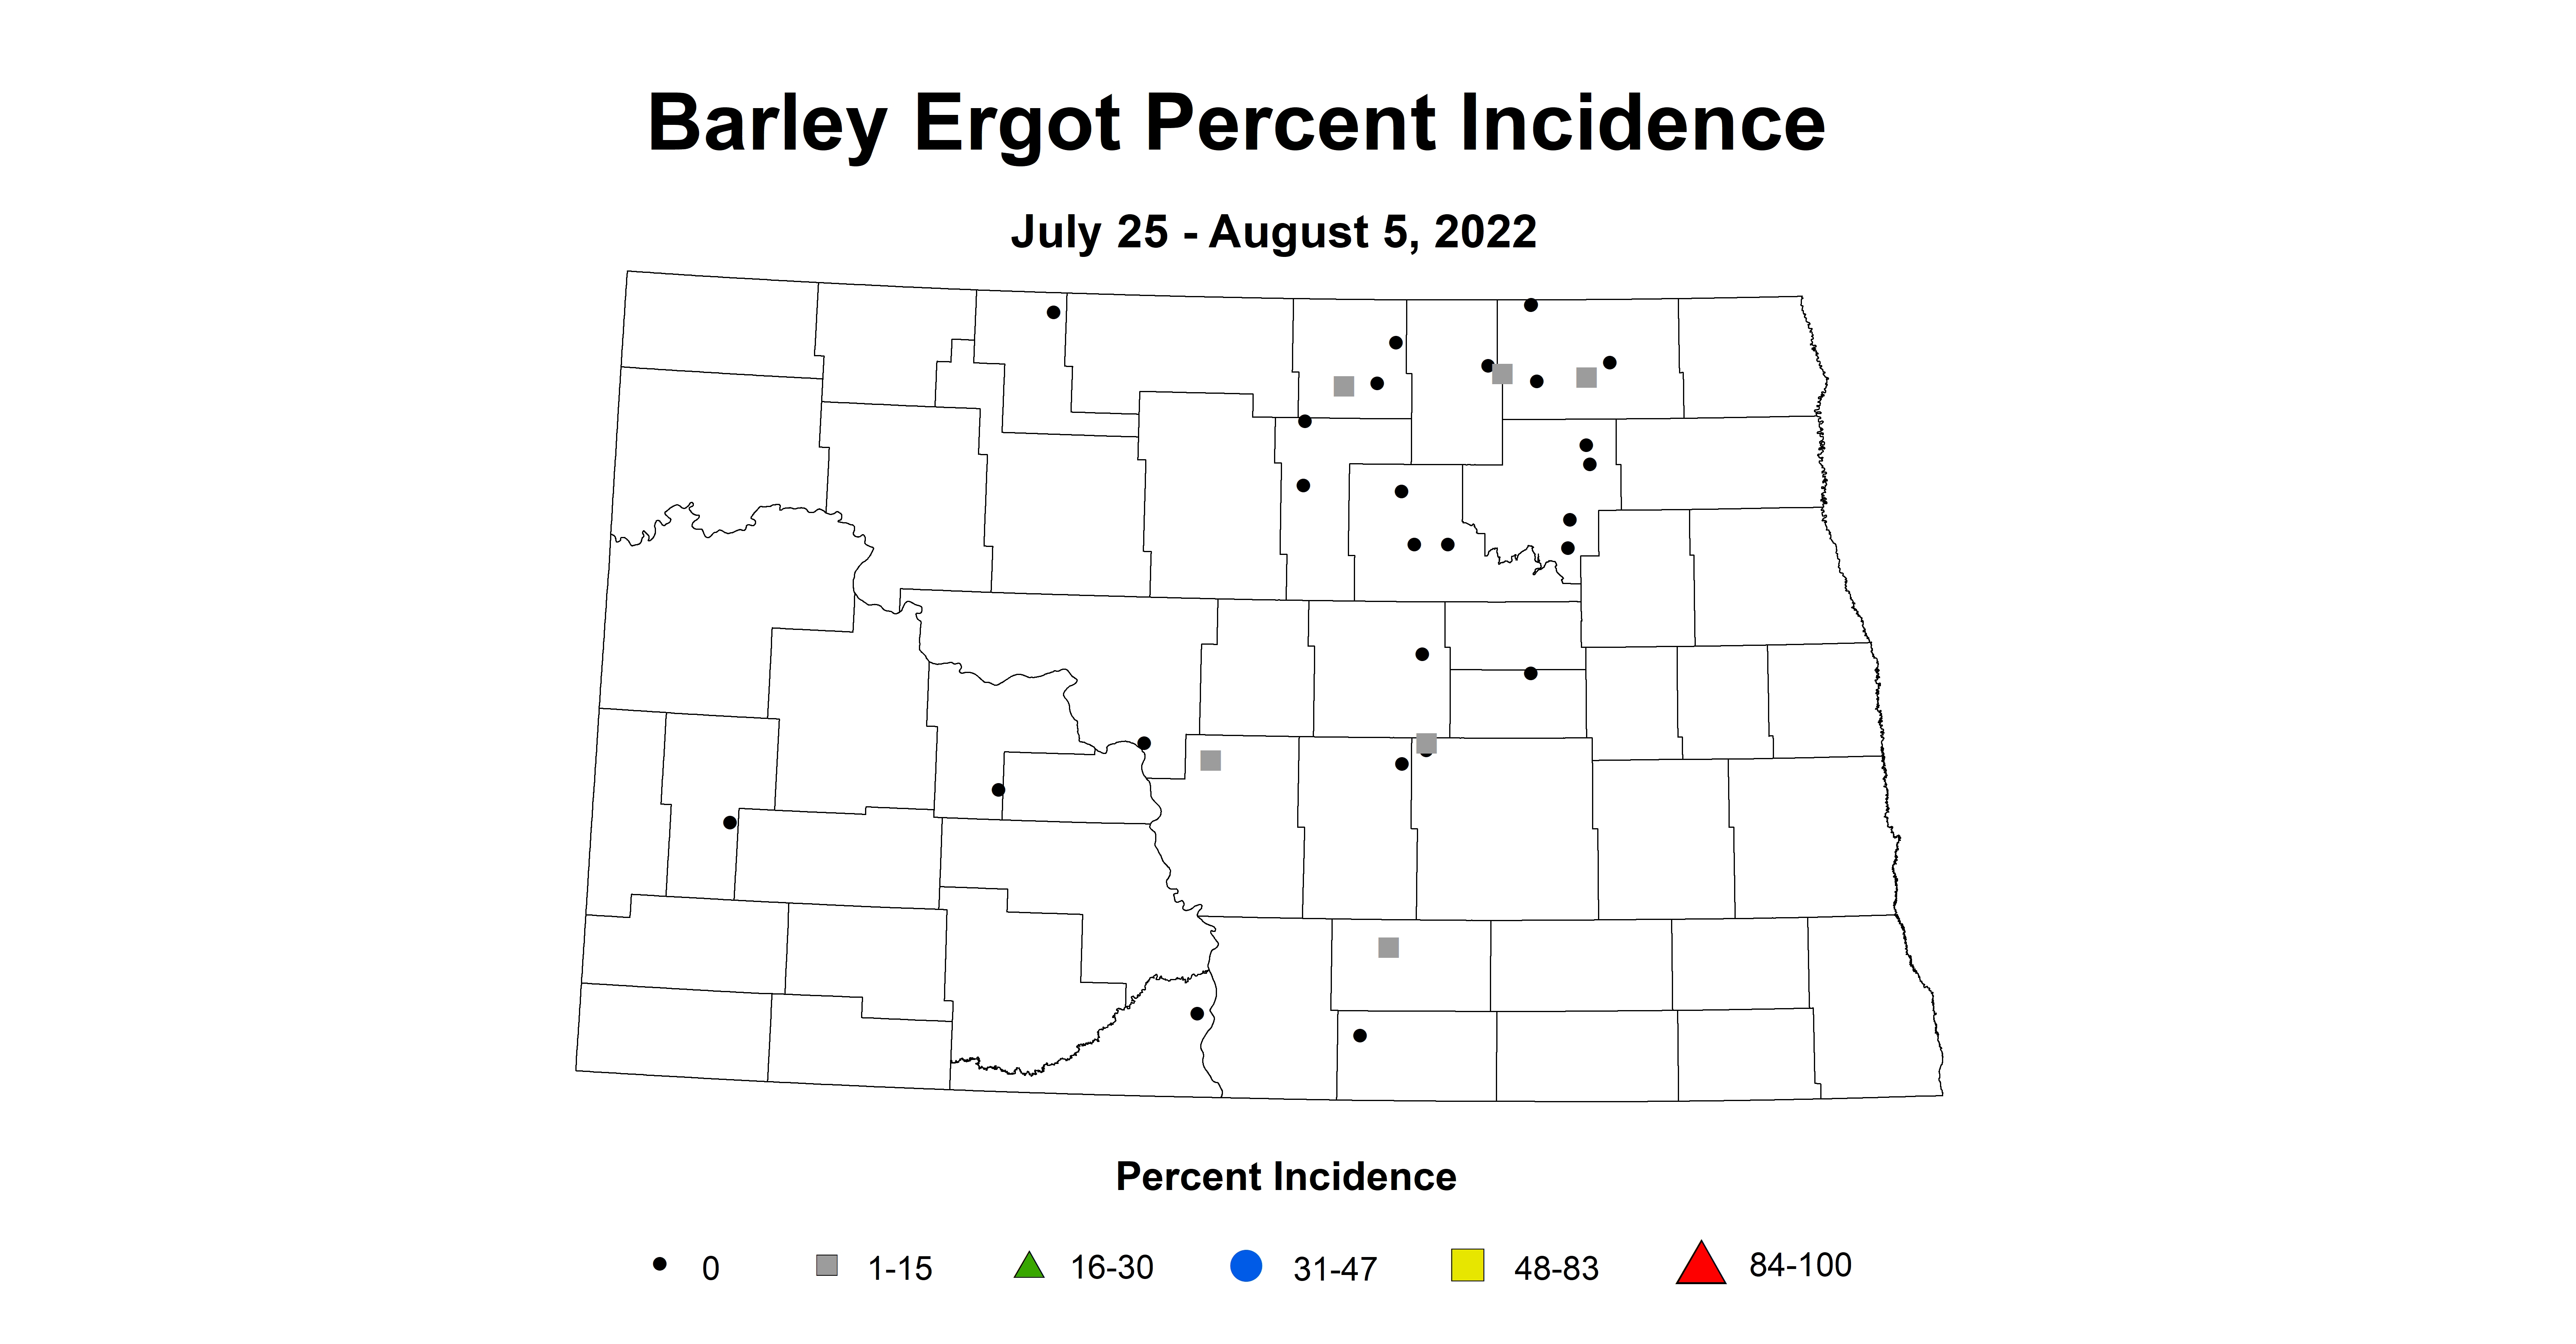 barley ergot percent incidence 2022 7.25-8.5.jpg